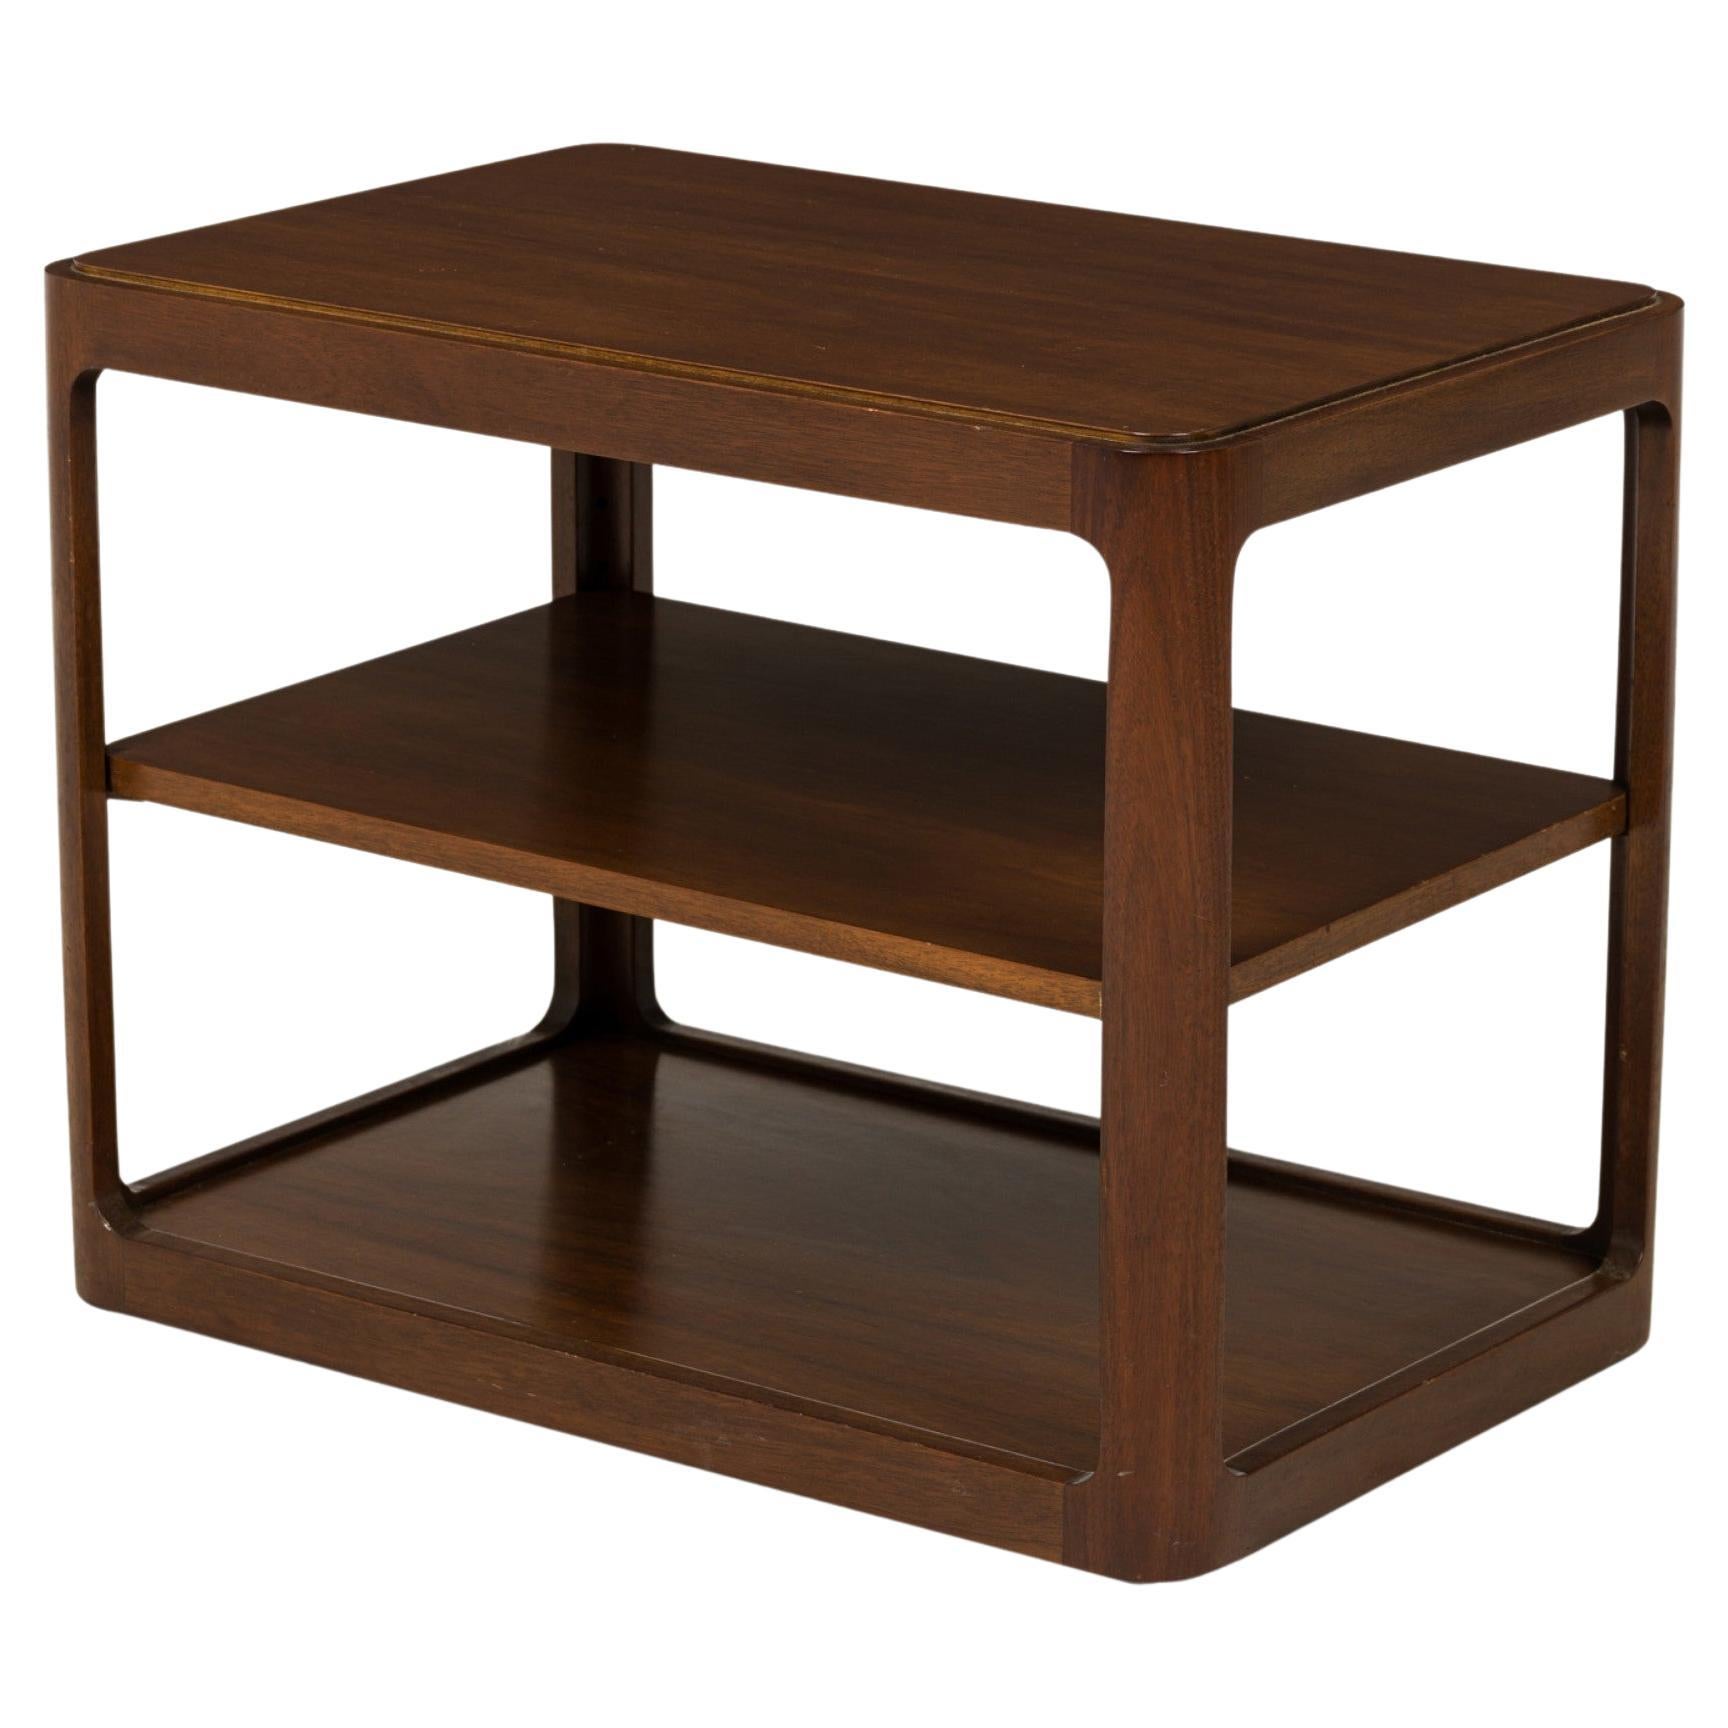 Roger Sprunger for Dunbar 'Radius' Form Wooden End Table For Sale